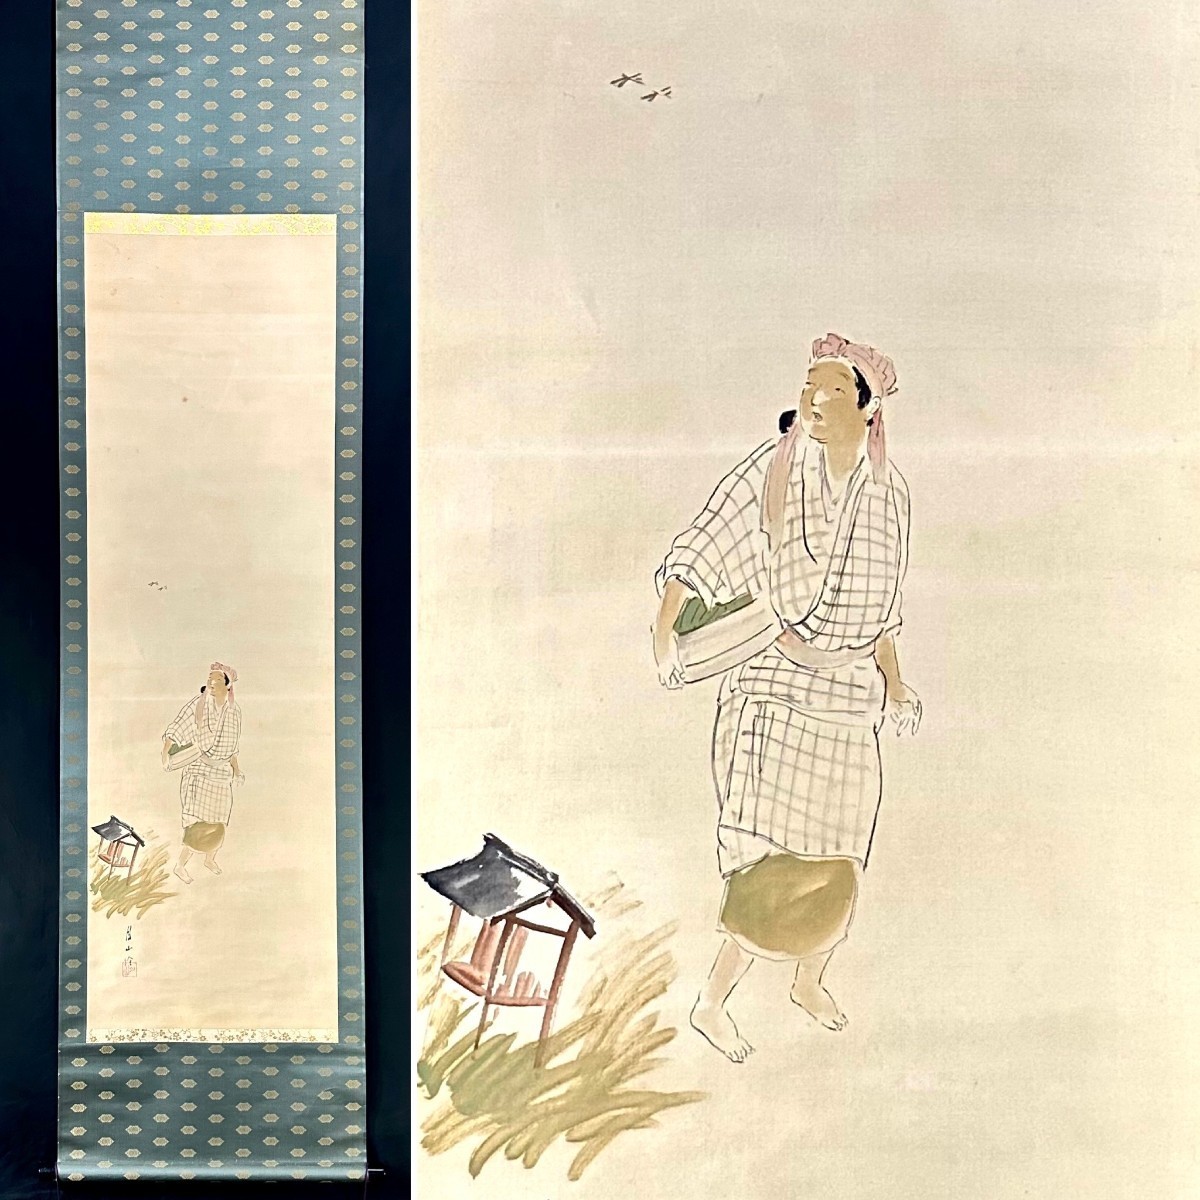 [प्रामाणिक] ओगाटा गेको पोर्ट्रेट हैंगिंग स्क्रॉल सिल्क जापानी पेंटिंग जापानी कला उकियो-ए कलाकार जापानी चित्रकार ओगाटा गेको एदो काल के तहत अध्ययन किया गया k020625, चित्रकारी, जापानी चित्रकला, व्यक्ति, बोधिसत्त्व